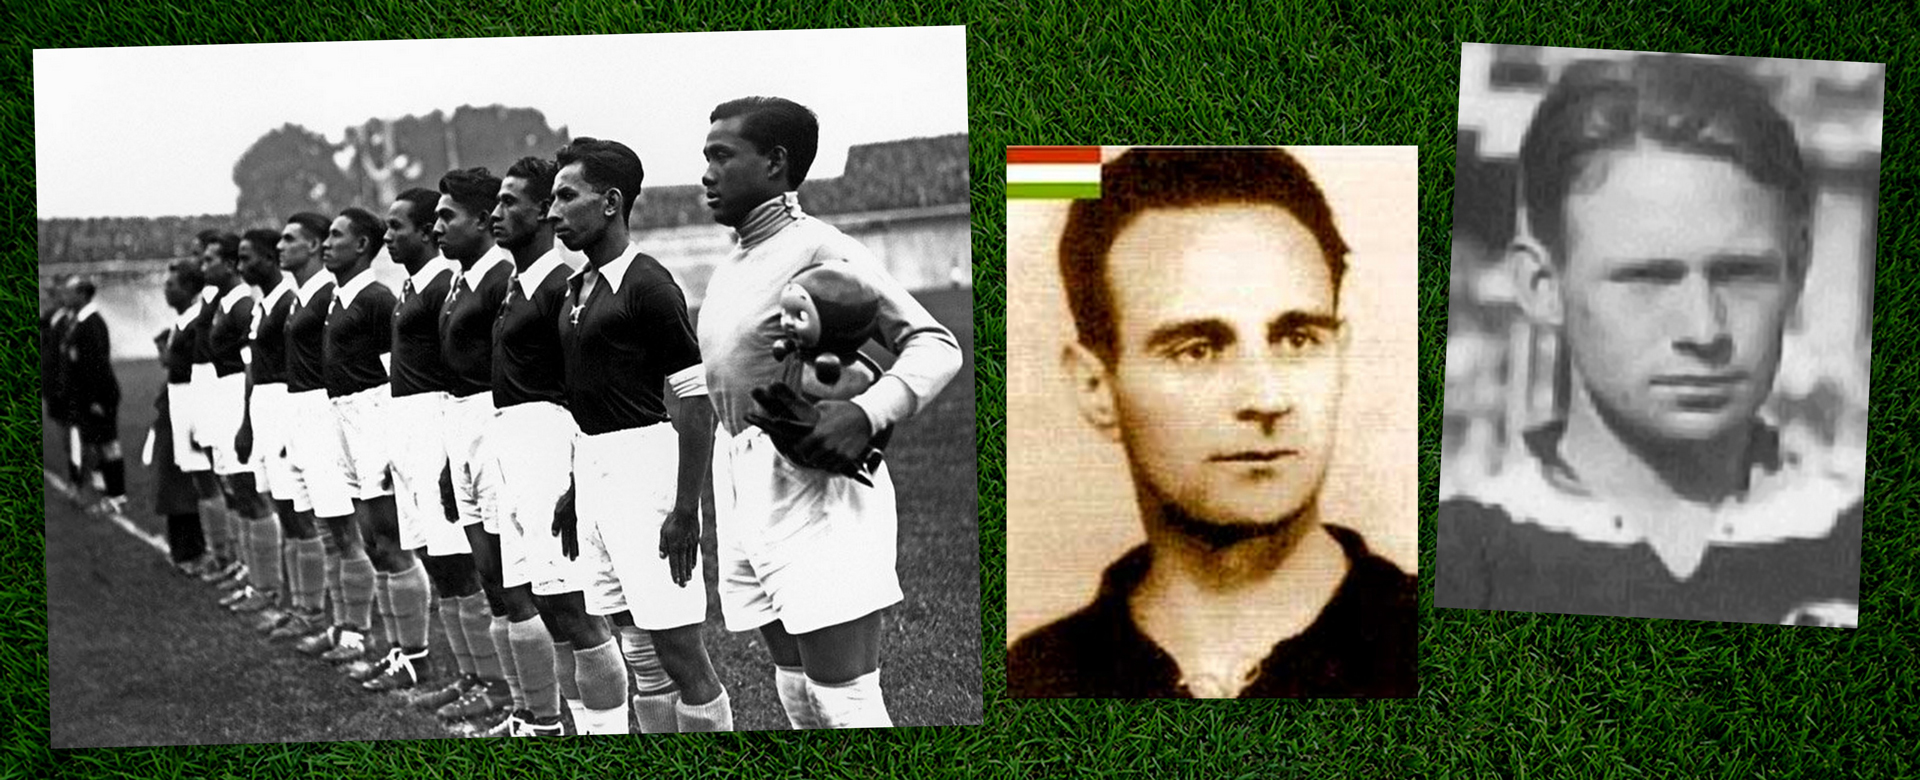 Квалификационный раунд Чемпионата мира 1938 года, Дьюла Женгеллар, Рейдар Кваммен, сборная Индии